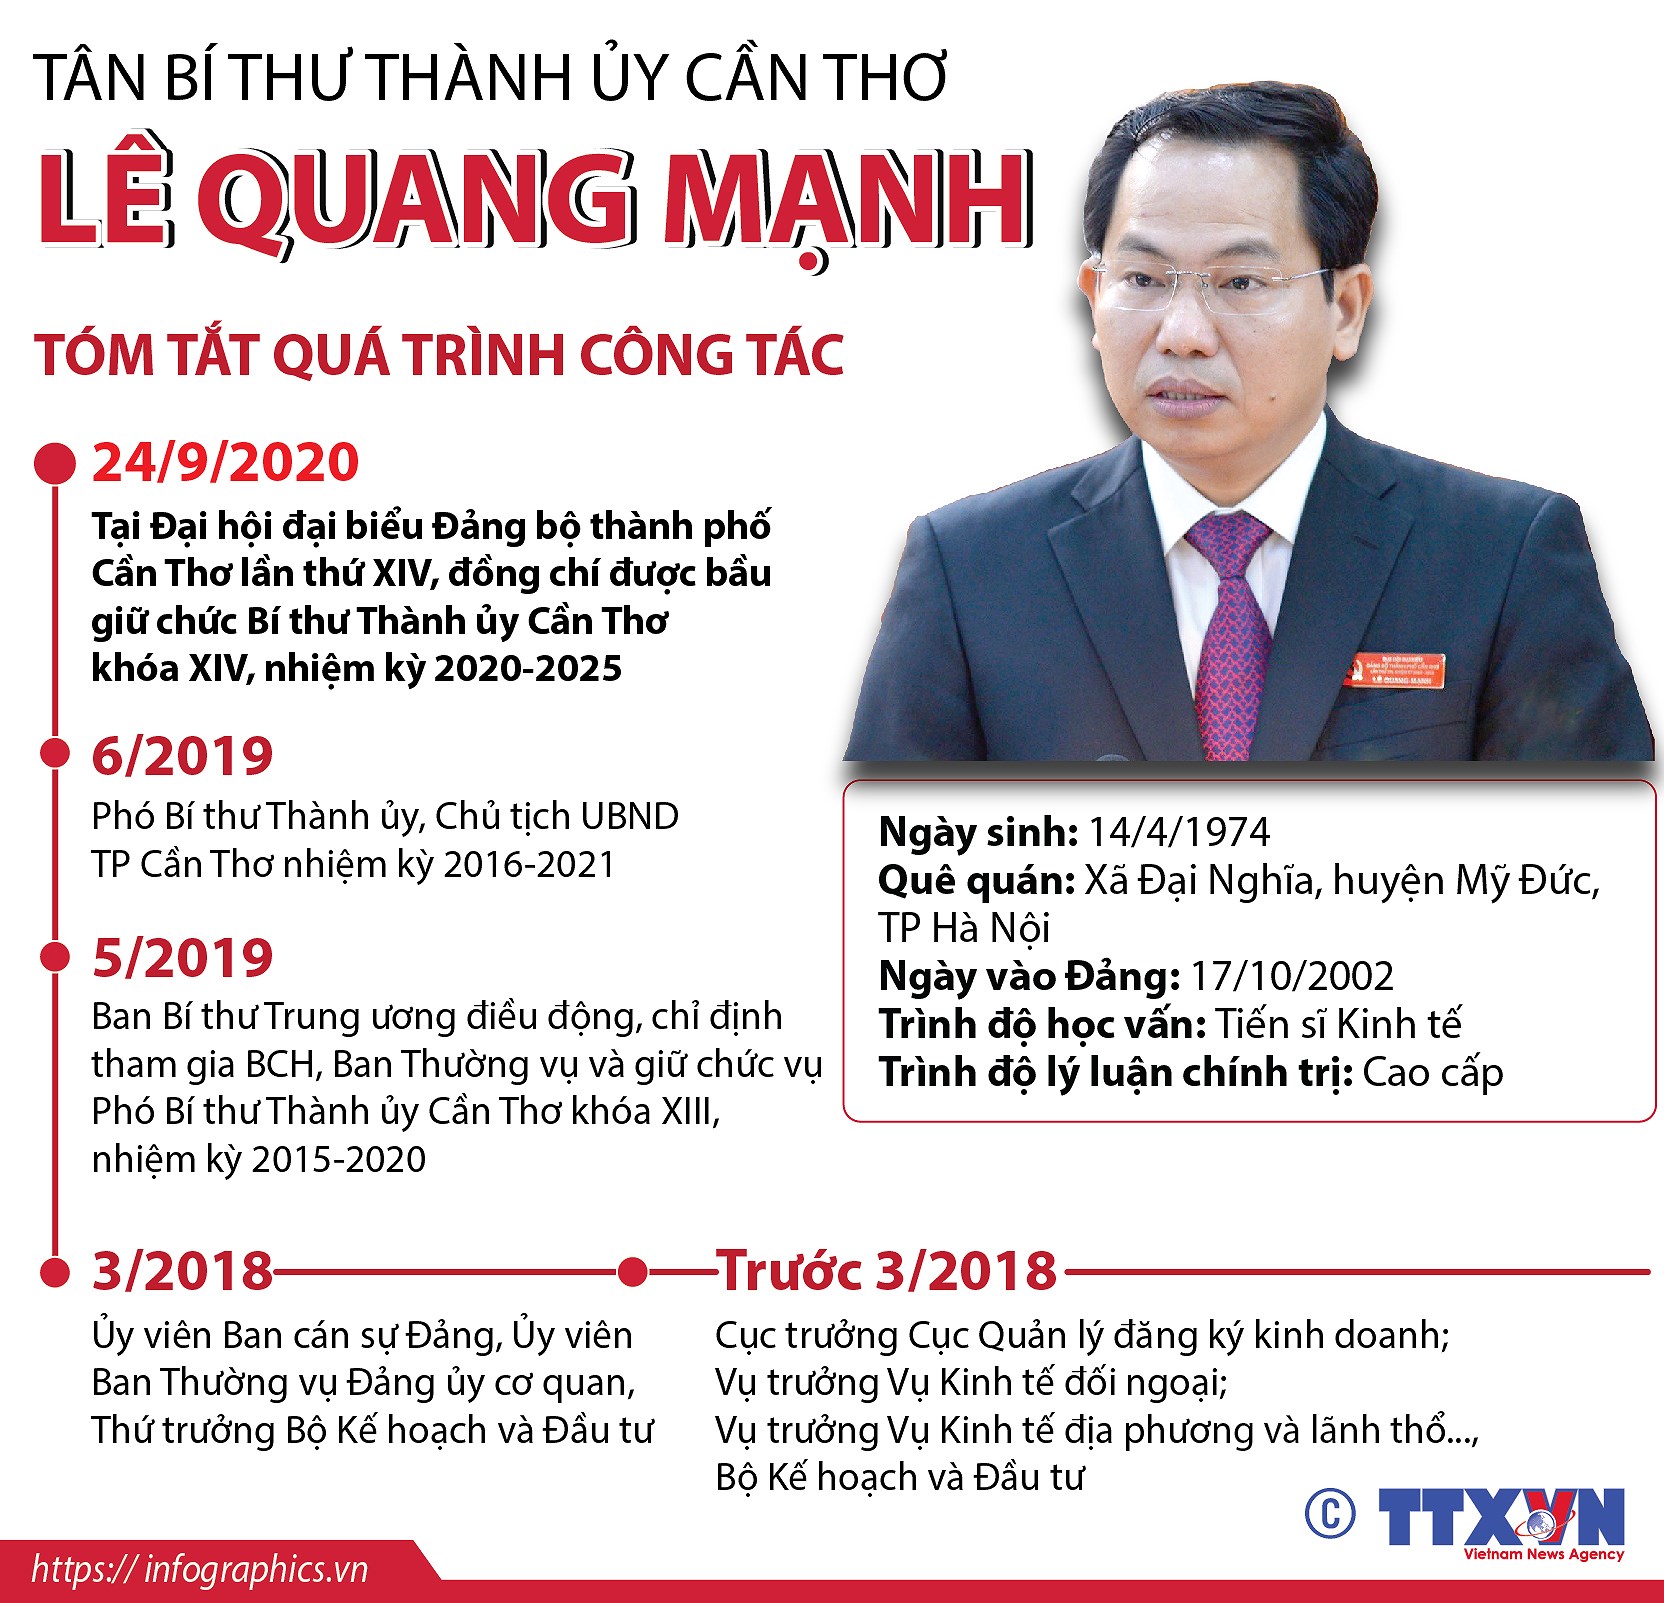 [Infographics] Tan Bi thu Thanh uy Can Tho Le Quang Manh hinh anh 1